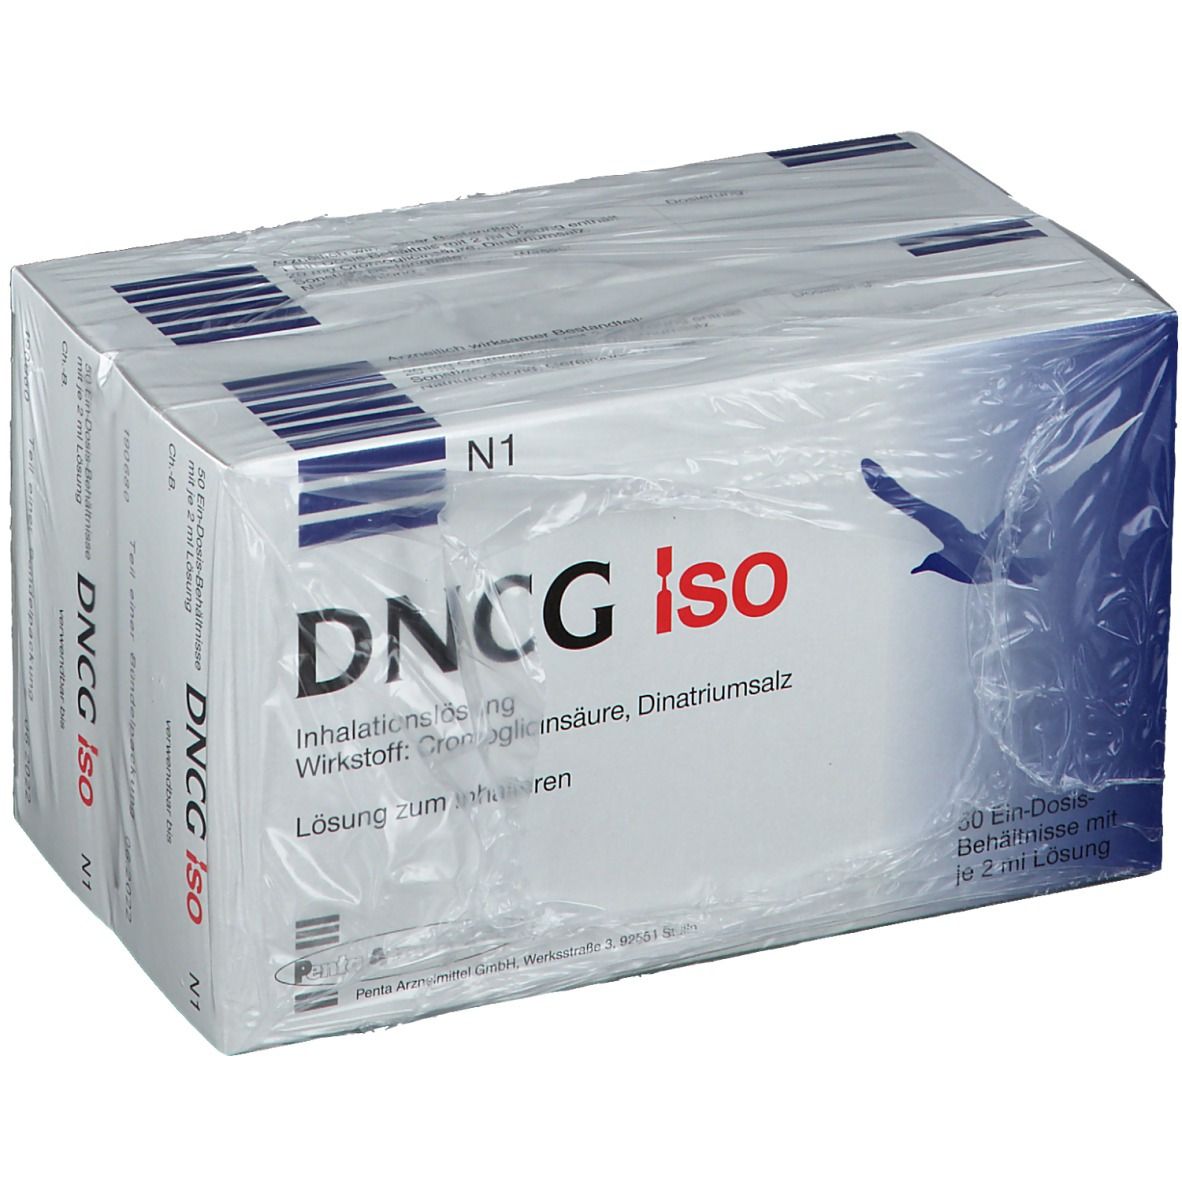 Dncg ISO Inhalationsloesung